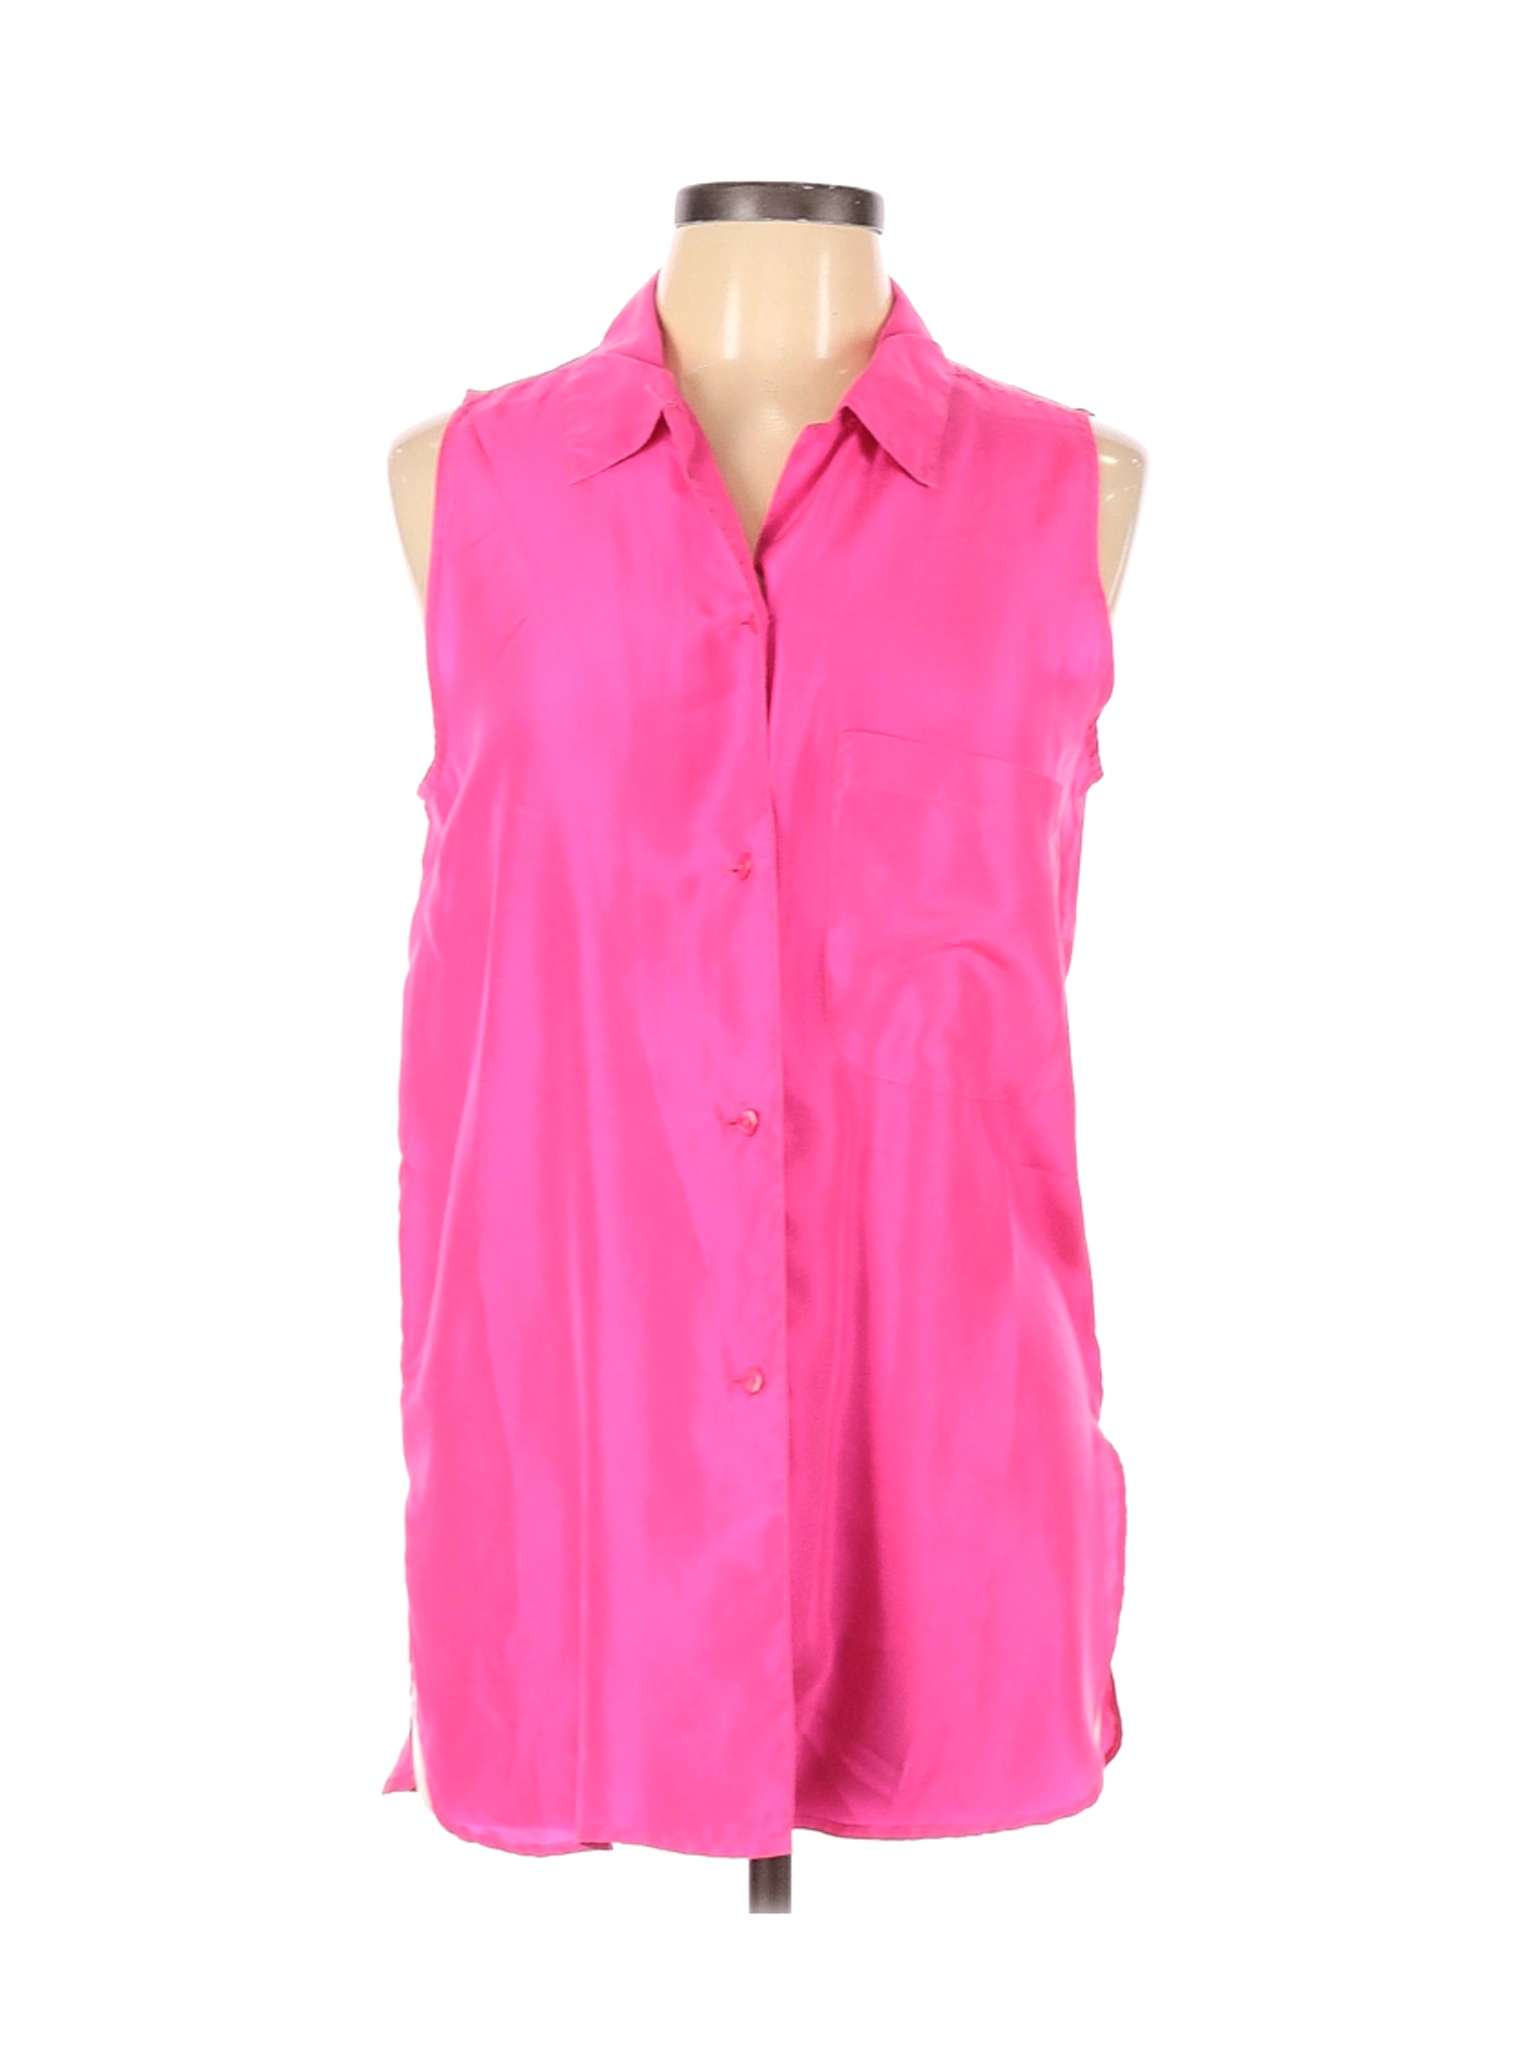 NWT The Limited Women Pink Sleeveless Silk Top M | eBay